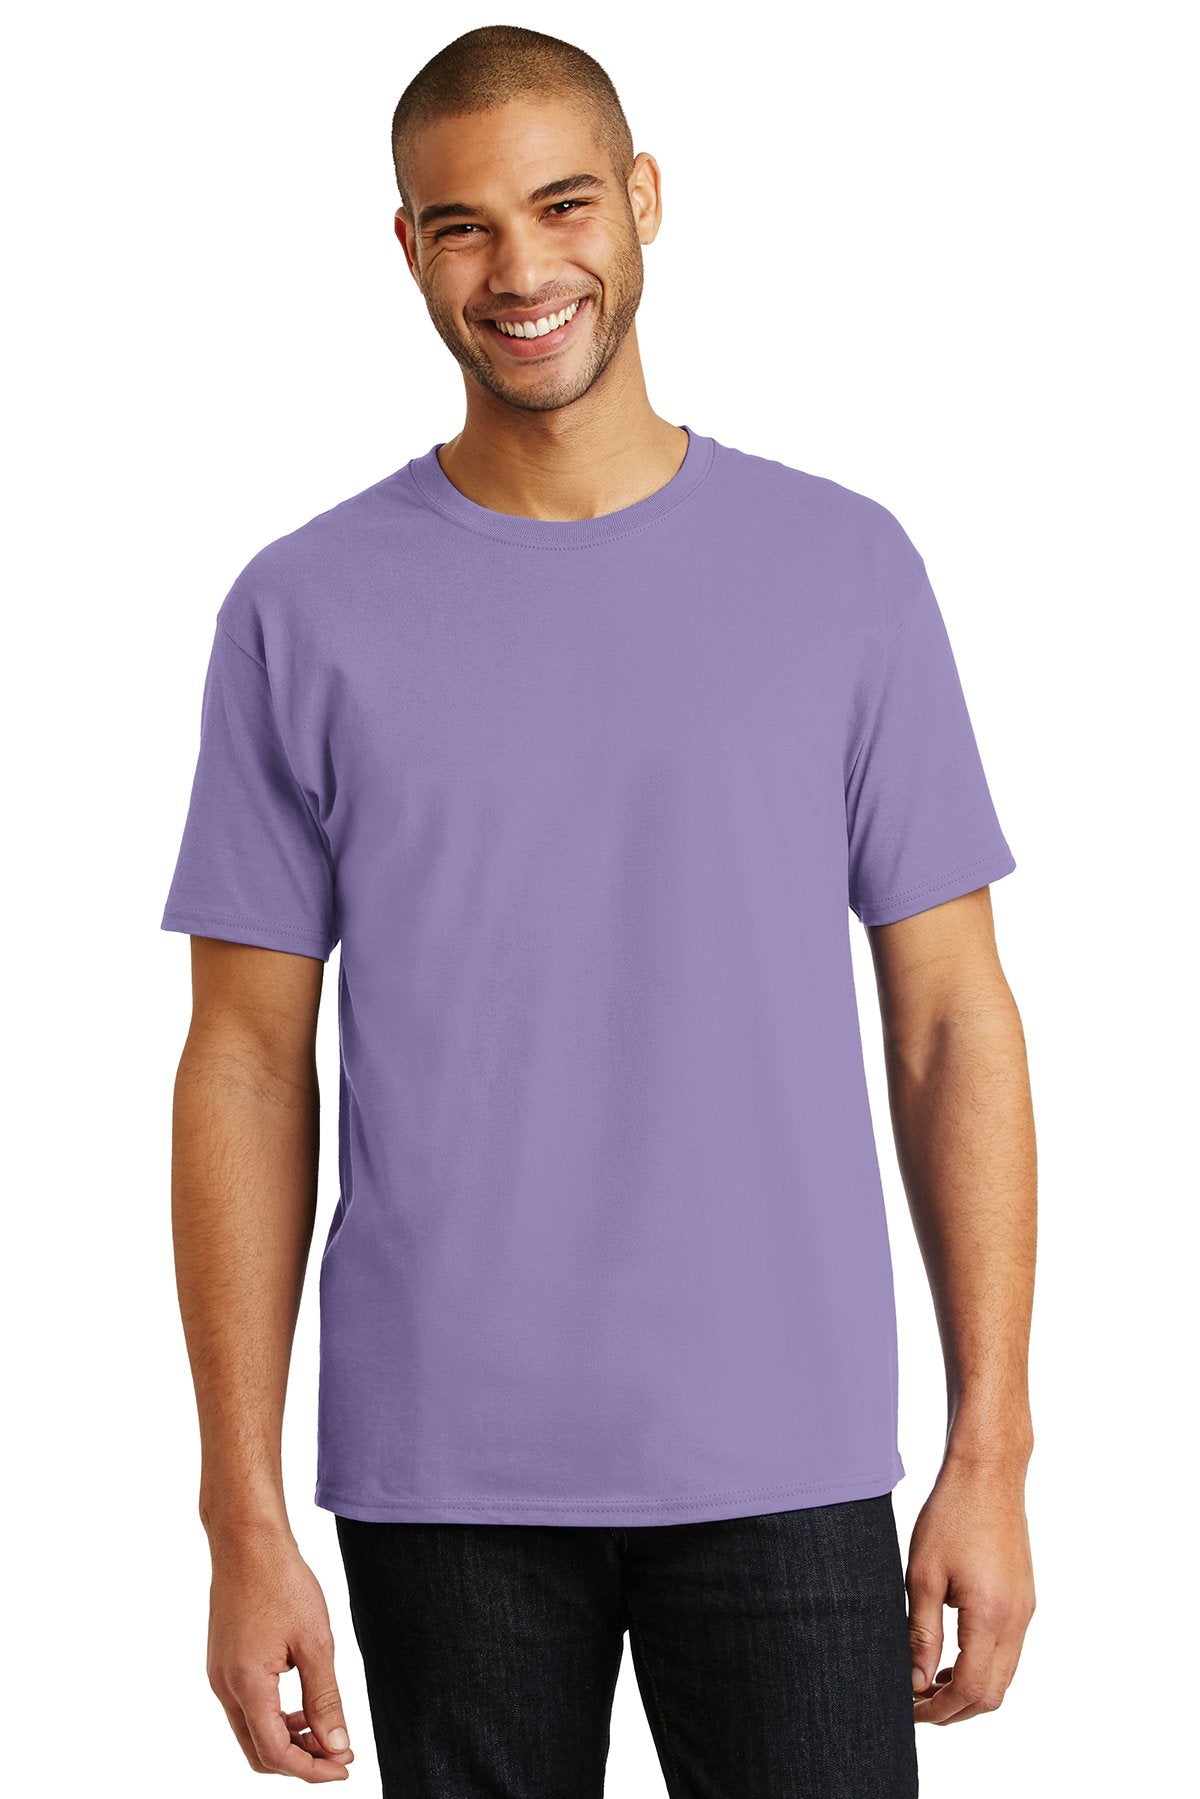 hanes tagless cotton t shirt 5250 lavender